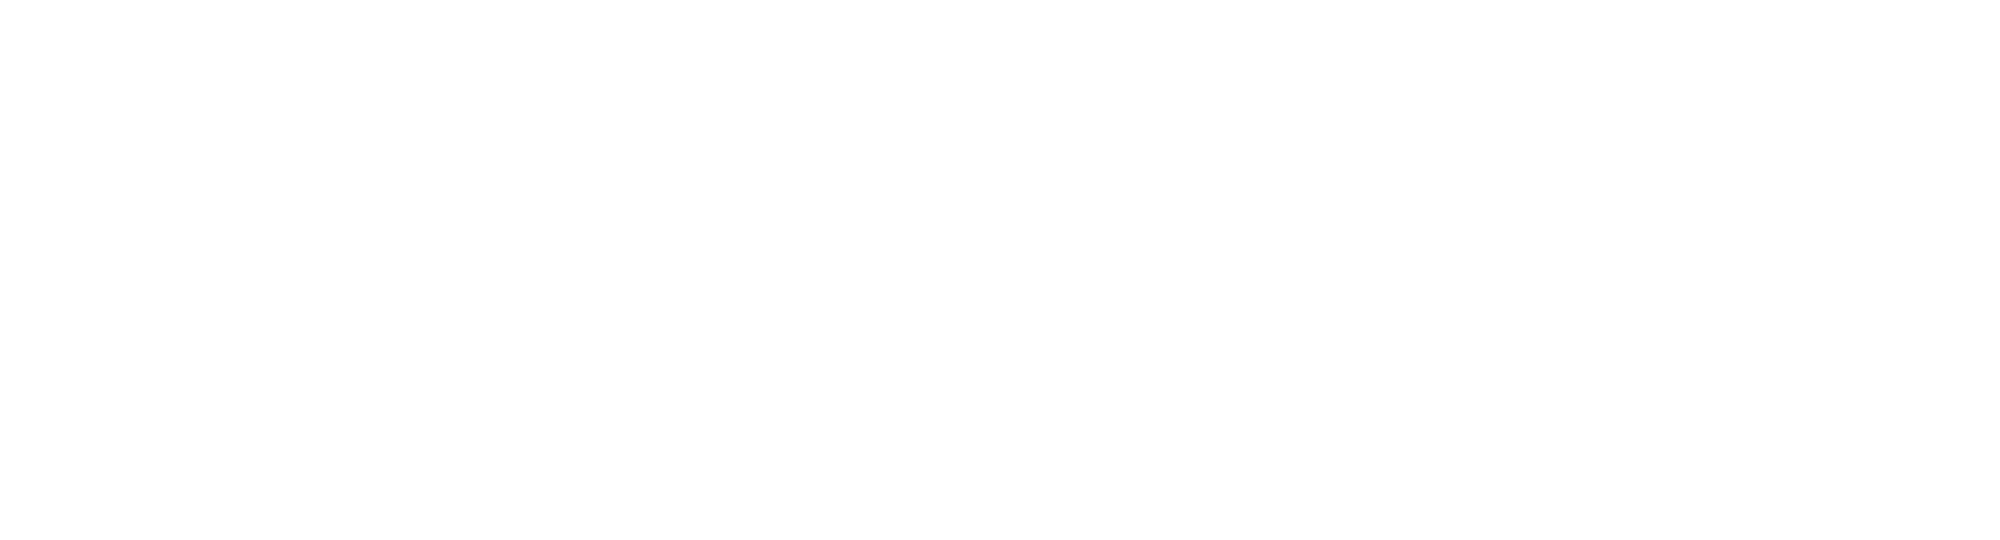 Finnish-red.cross-logo-w